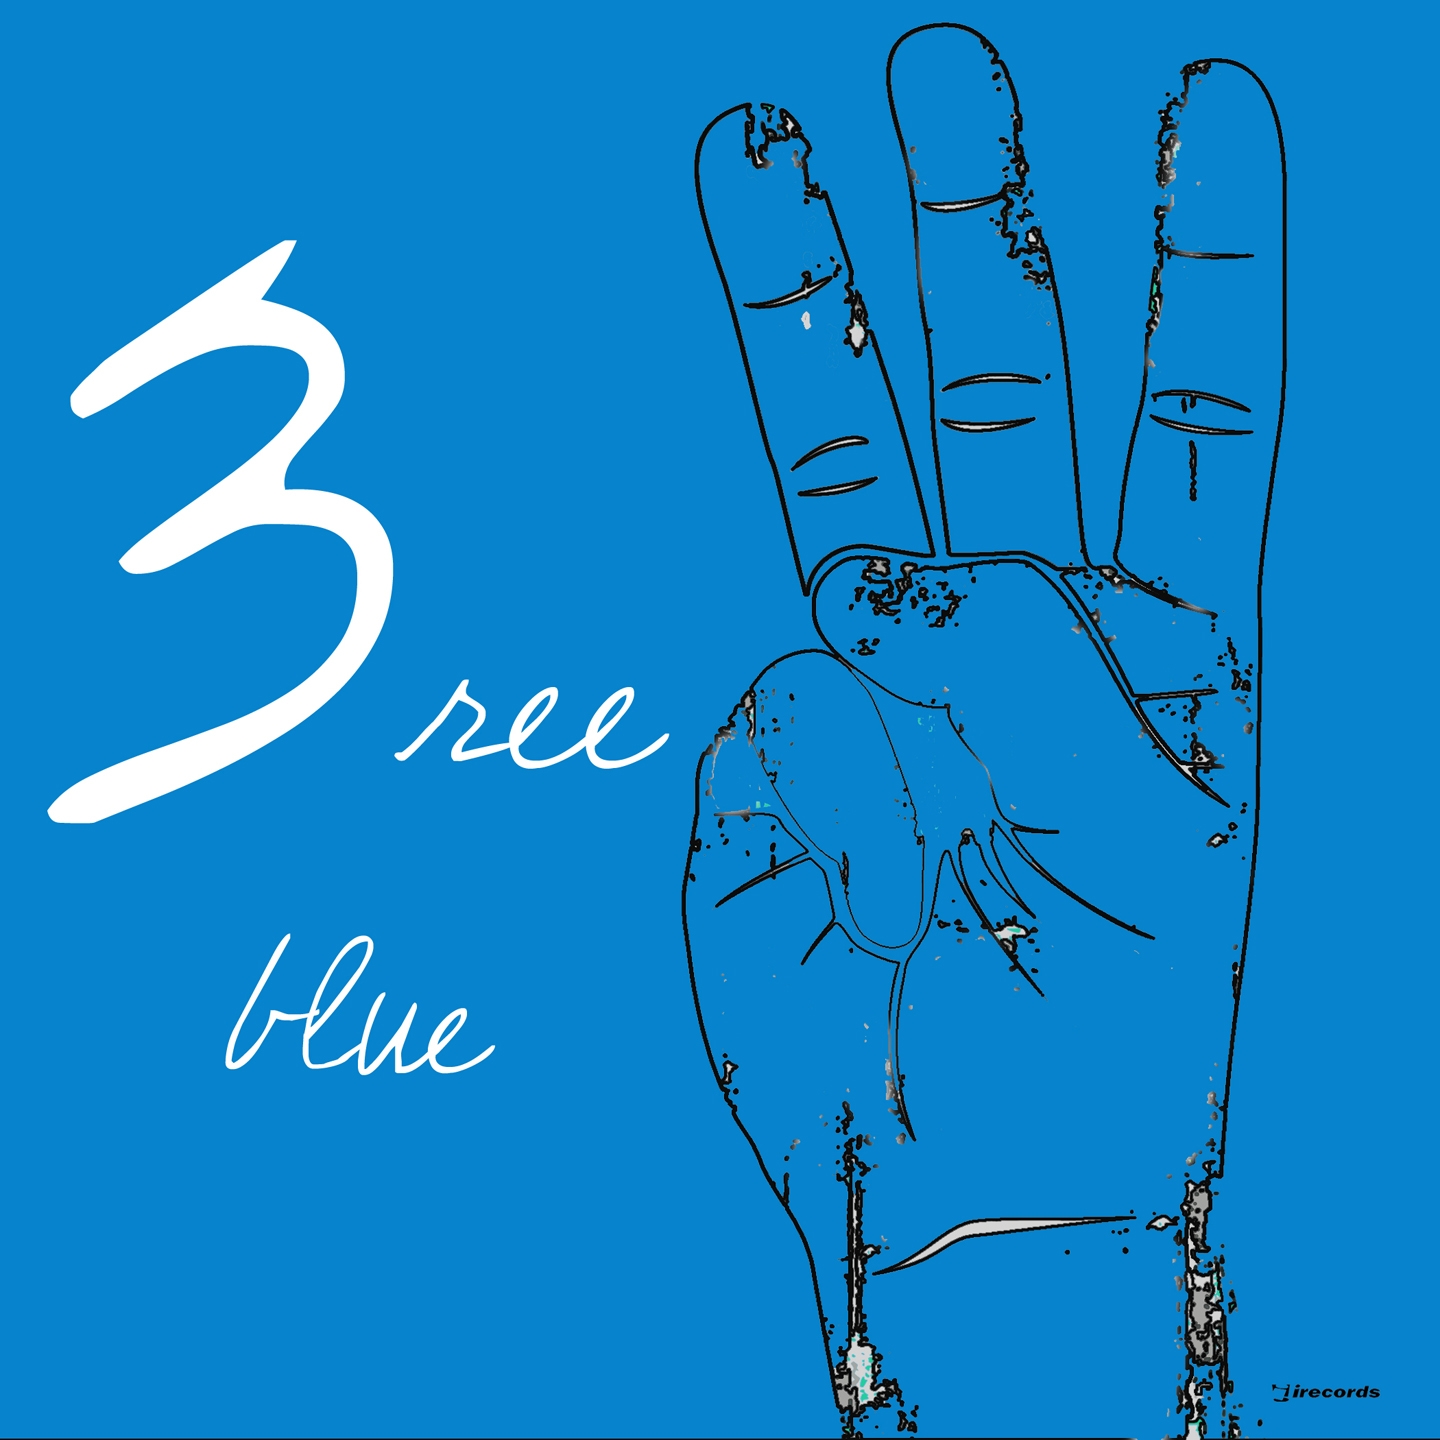 3ree Blue